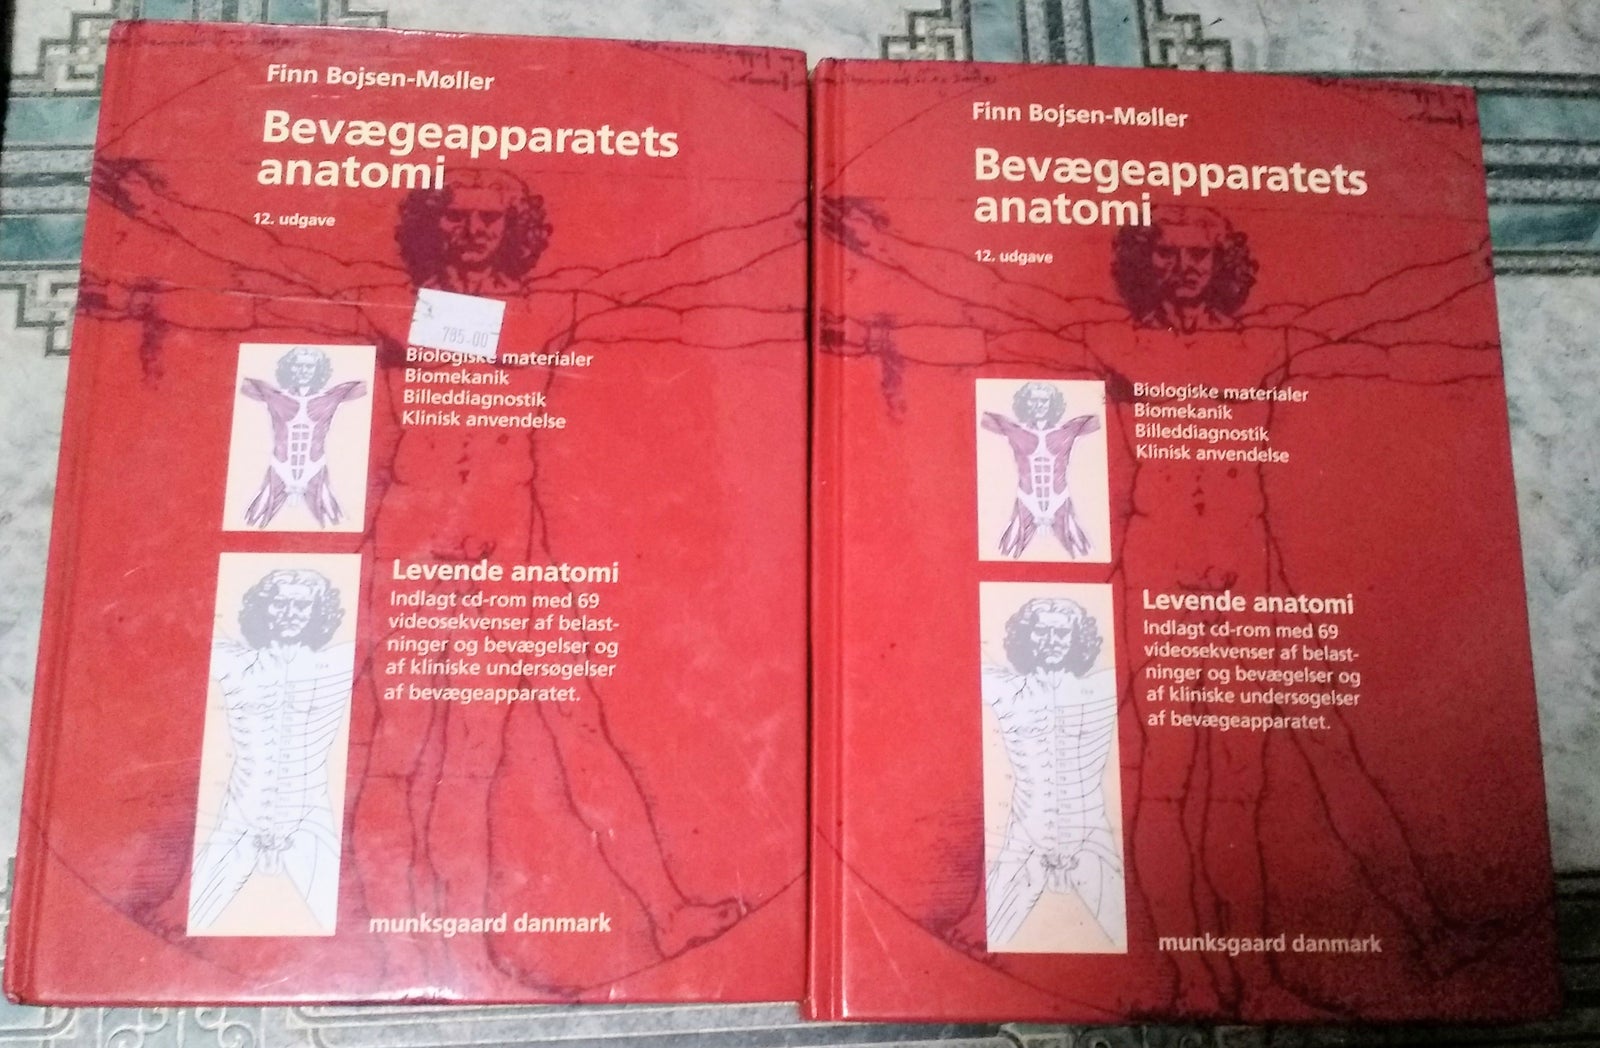 Bevægeapparatet s anatomi , Finn Bojsen-Moller, år 2003